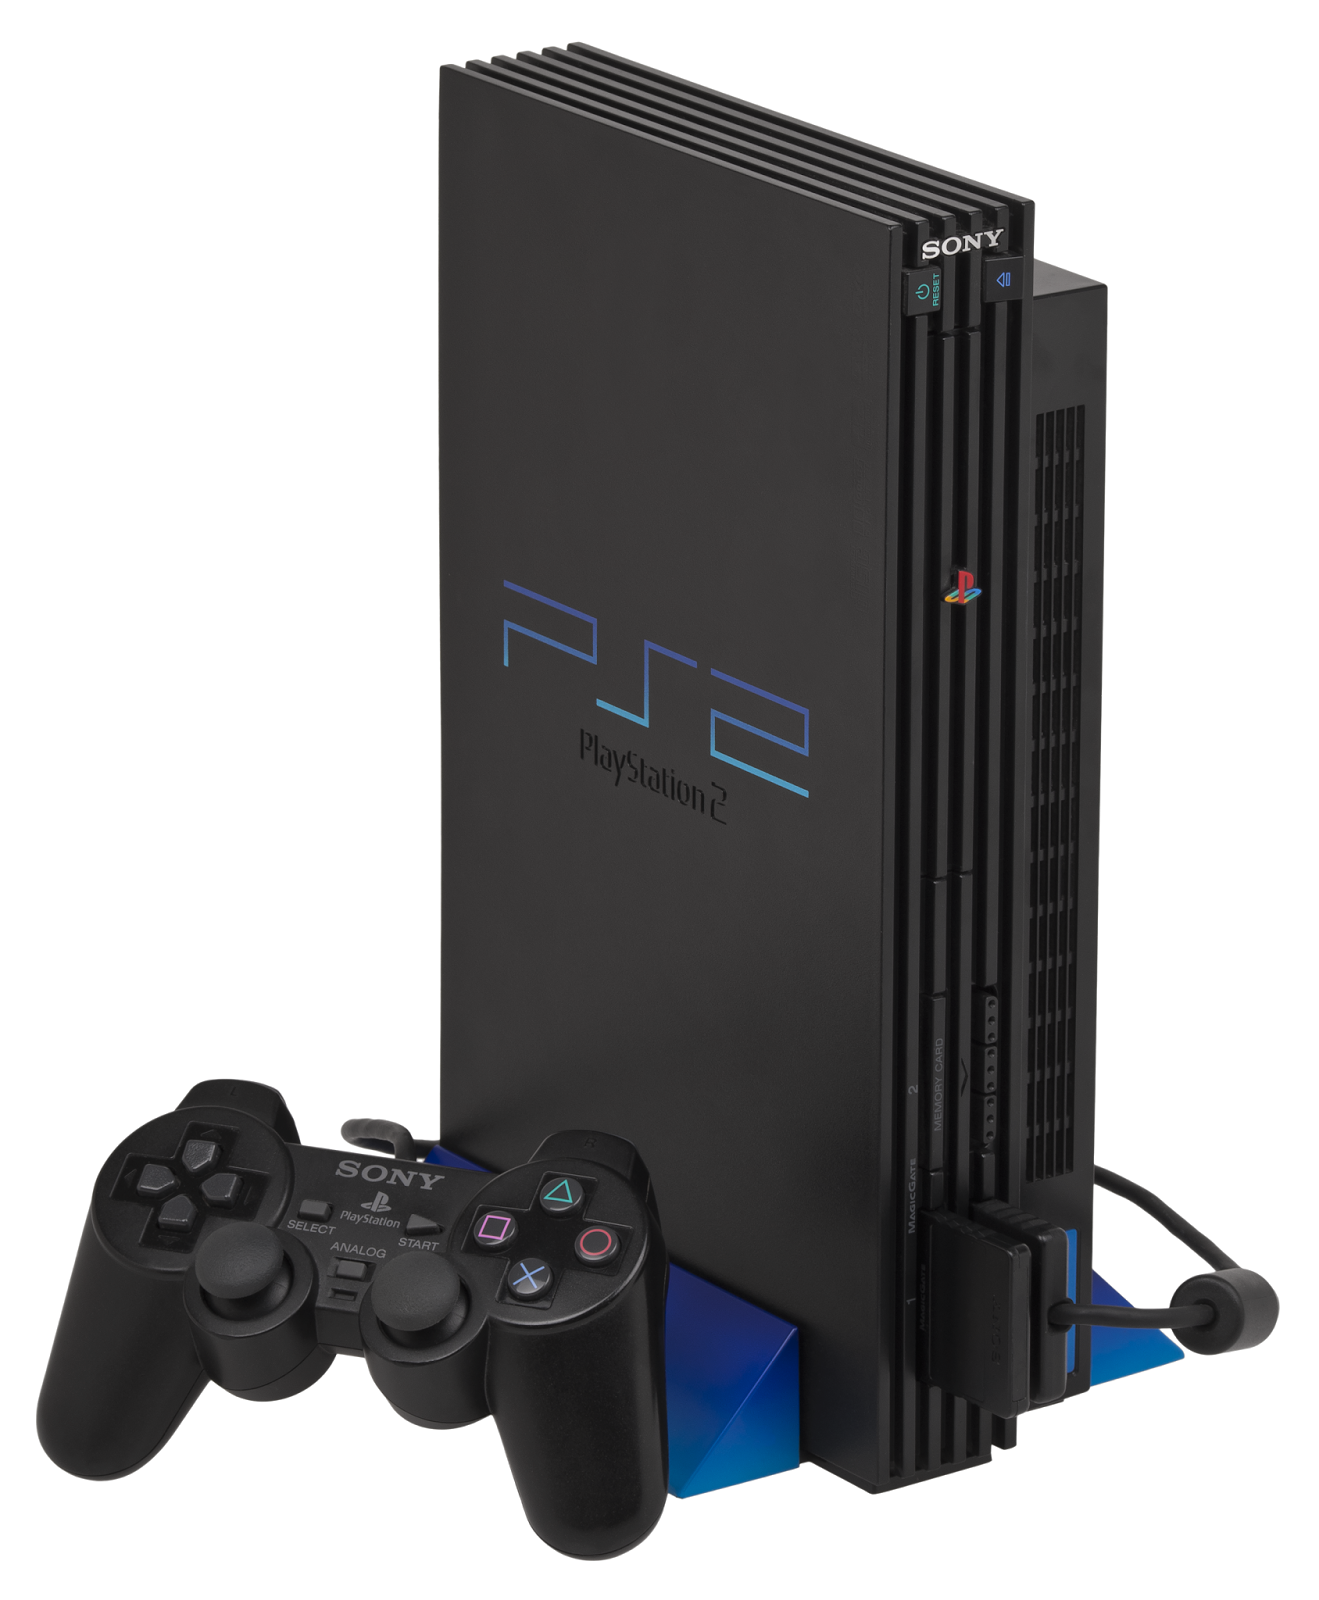 File:PS2-Slim-Console-Set.jpg - Wikimedia Commons